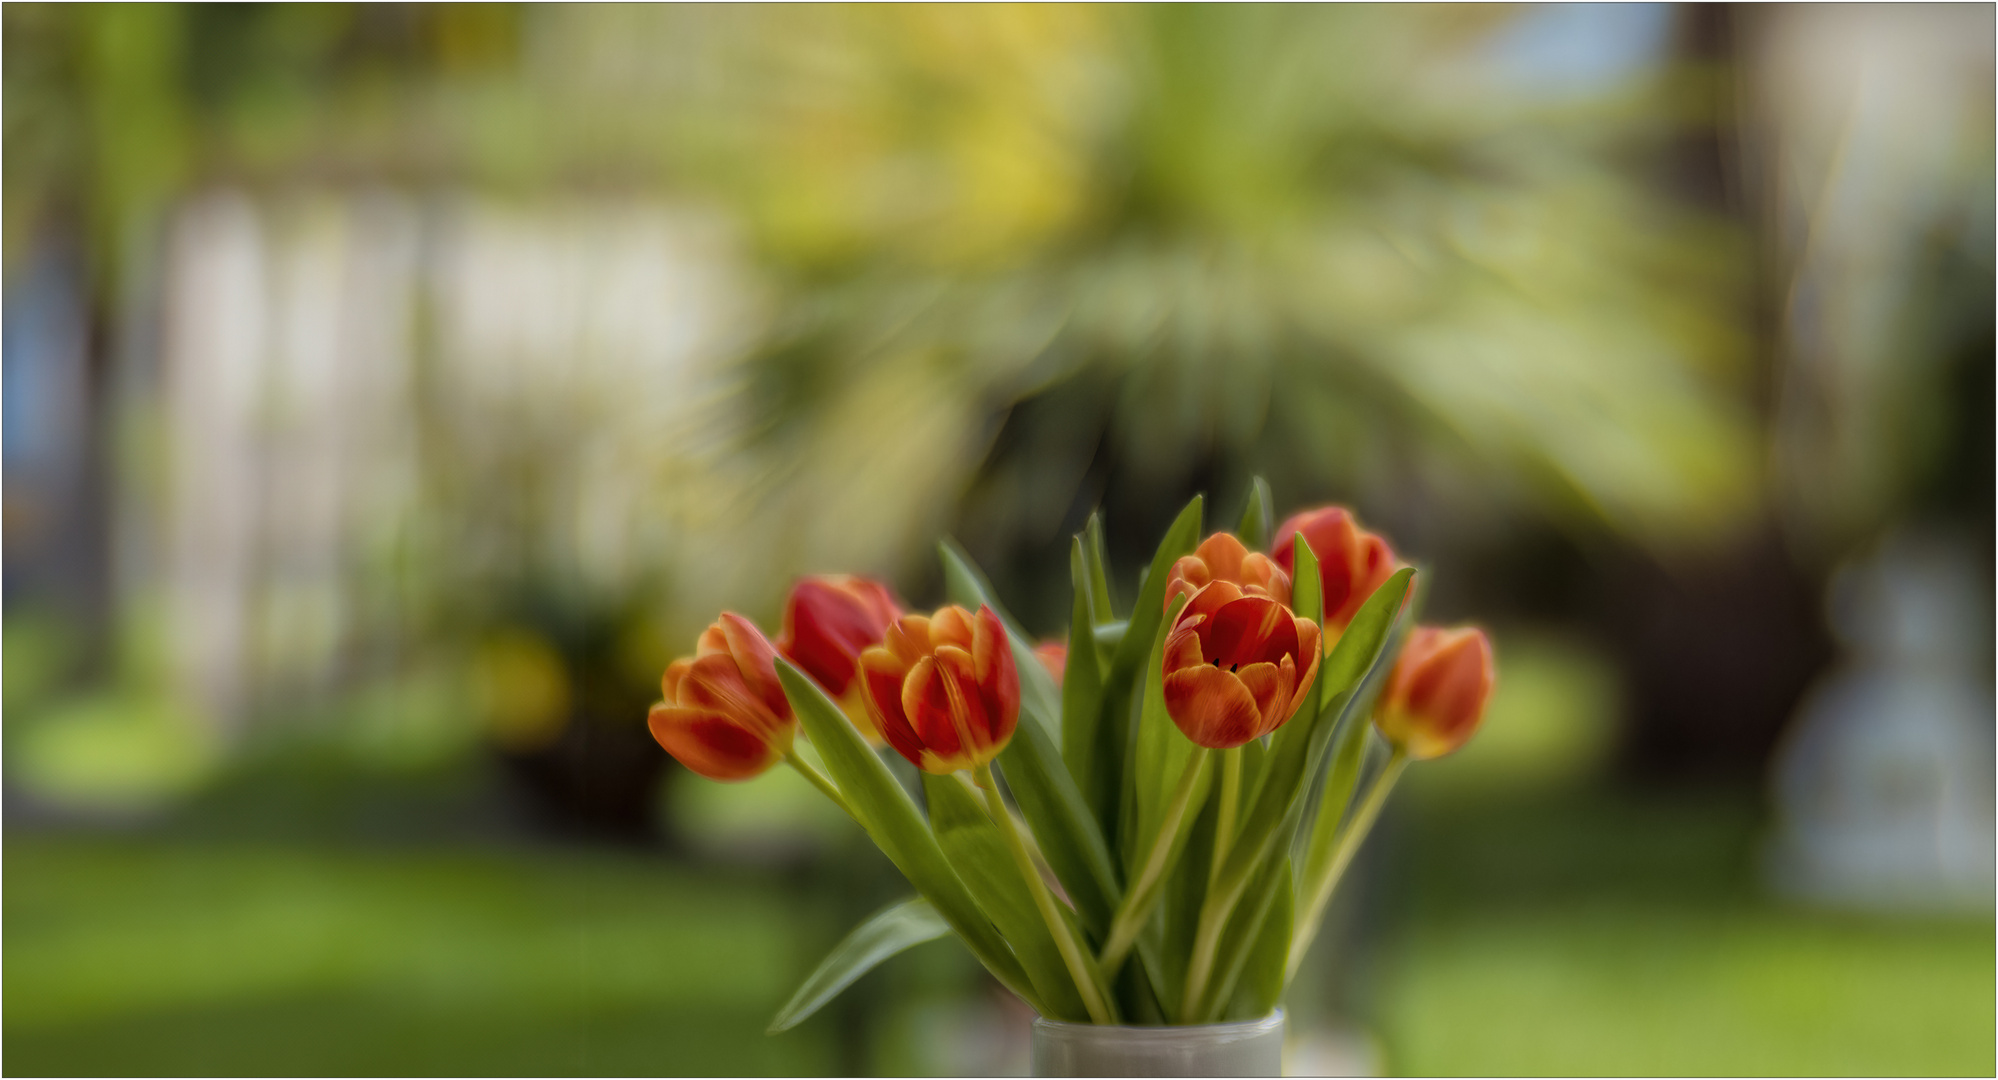 Testbild mit Tulpen – Offenblende